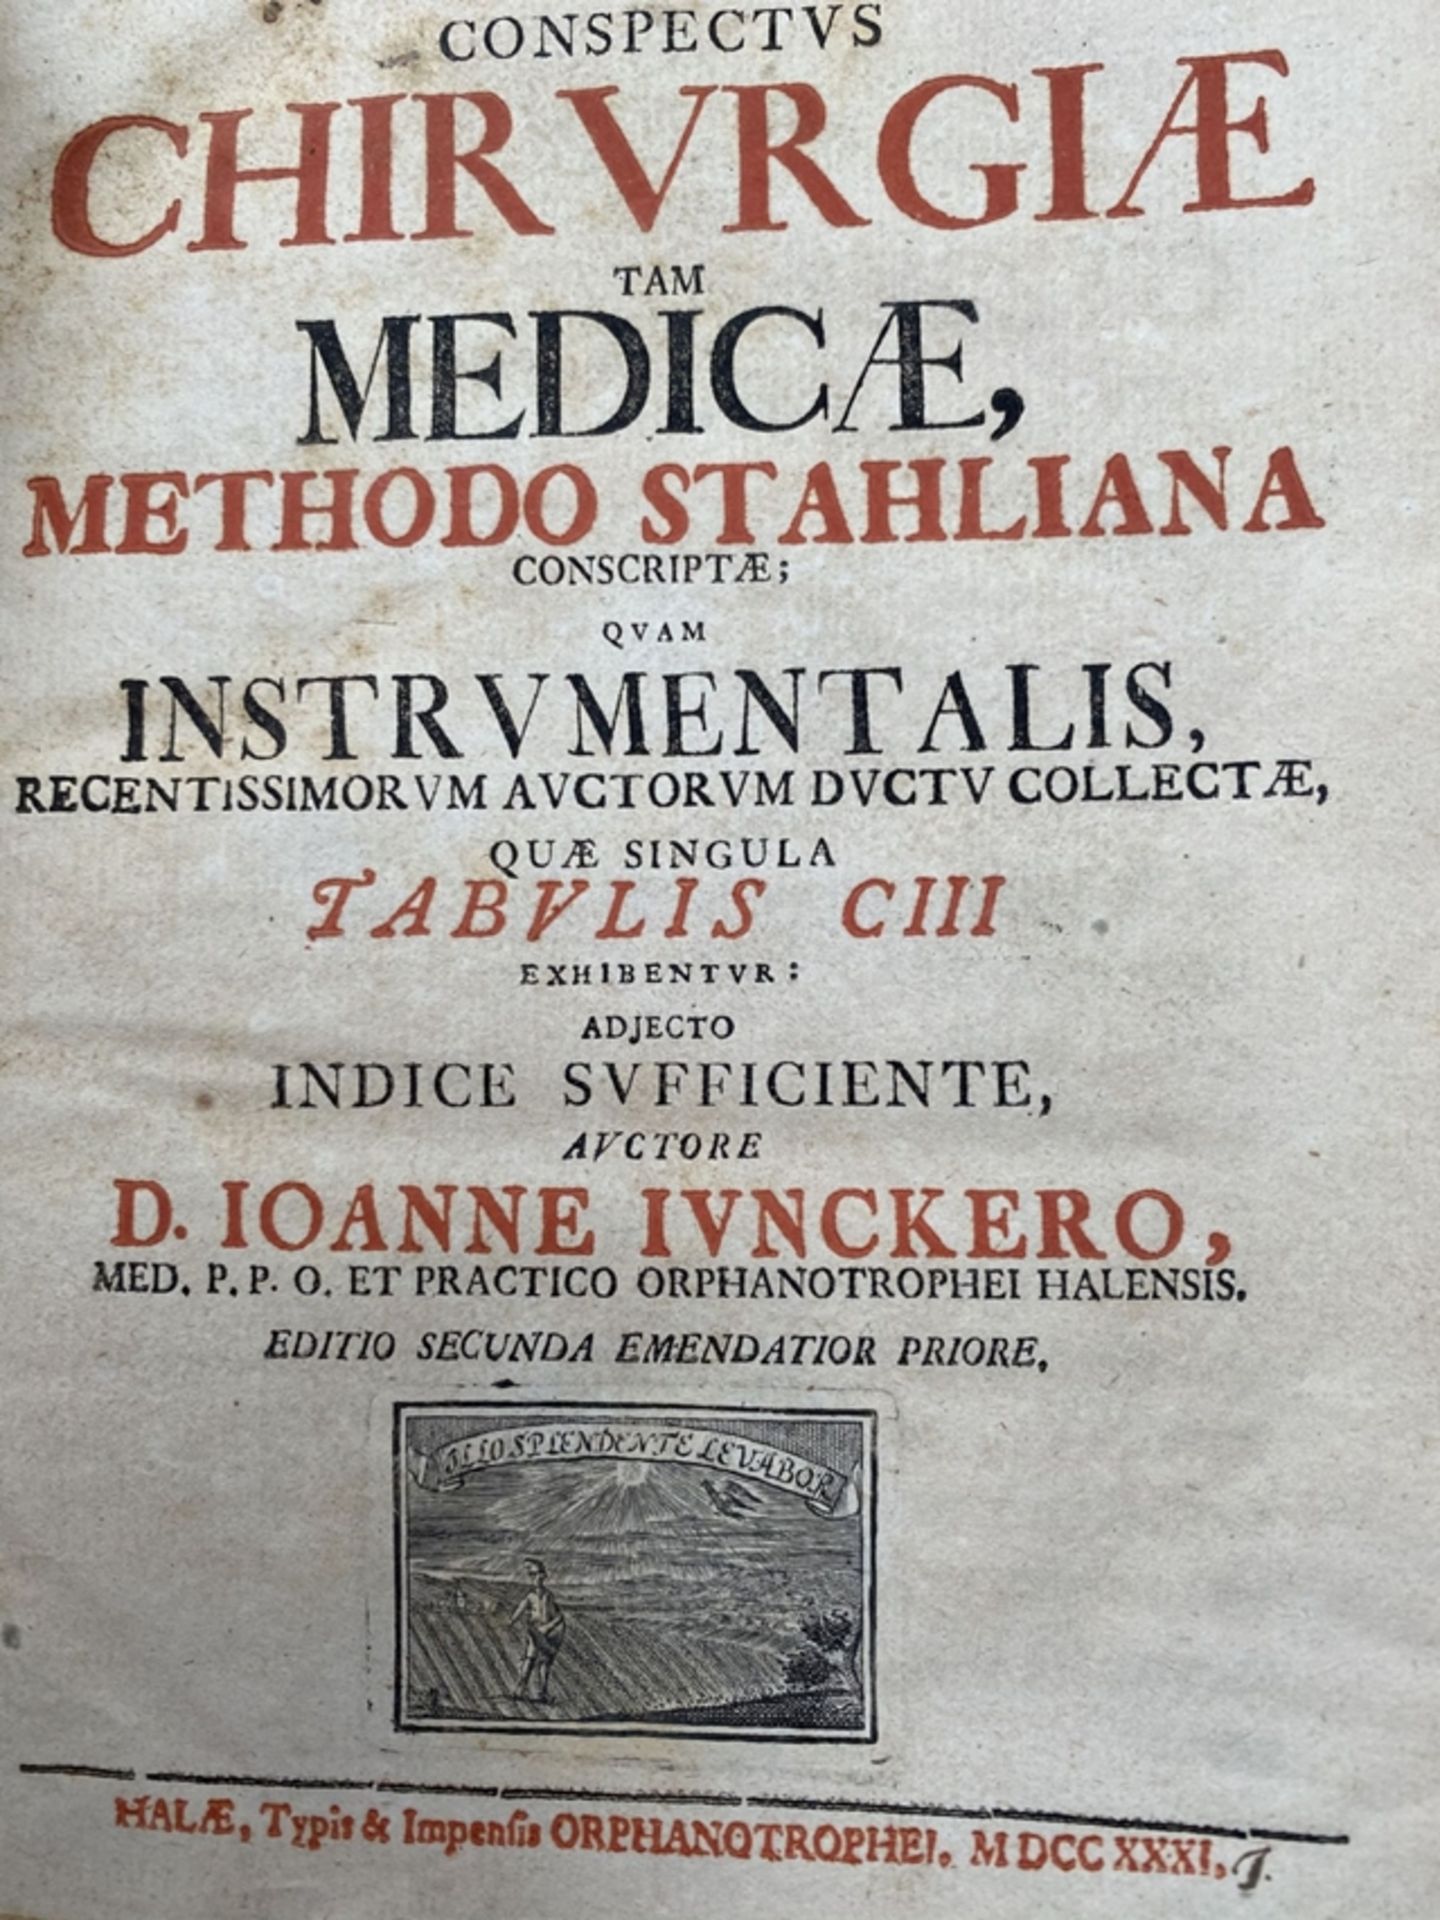 JUNCKER (JUNKER), JOHANN, Conspectus Chirurgiae tam Medicae, Methodo Stahliana cinscriptae qvam Ins